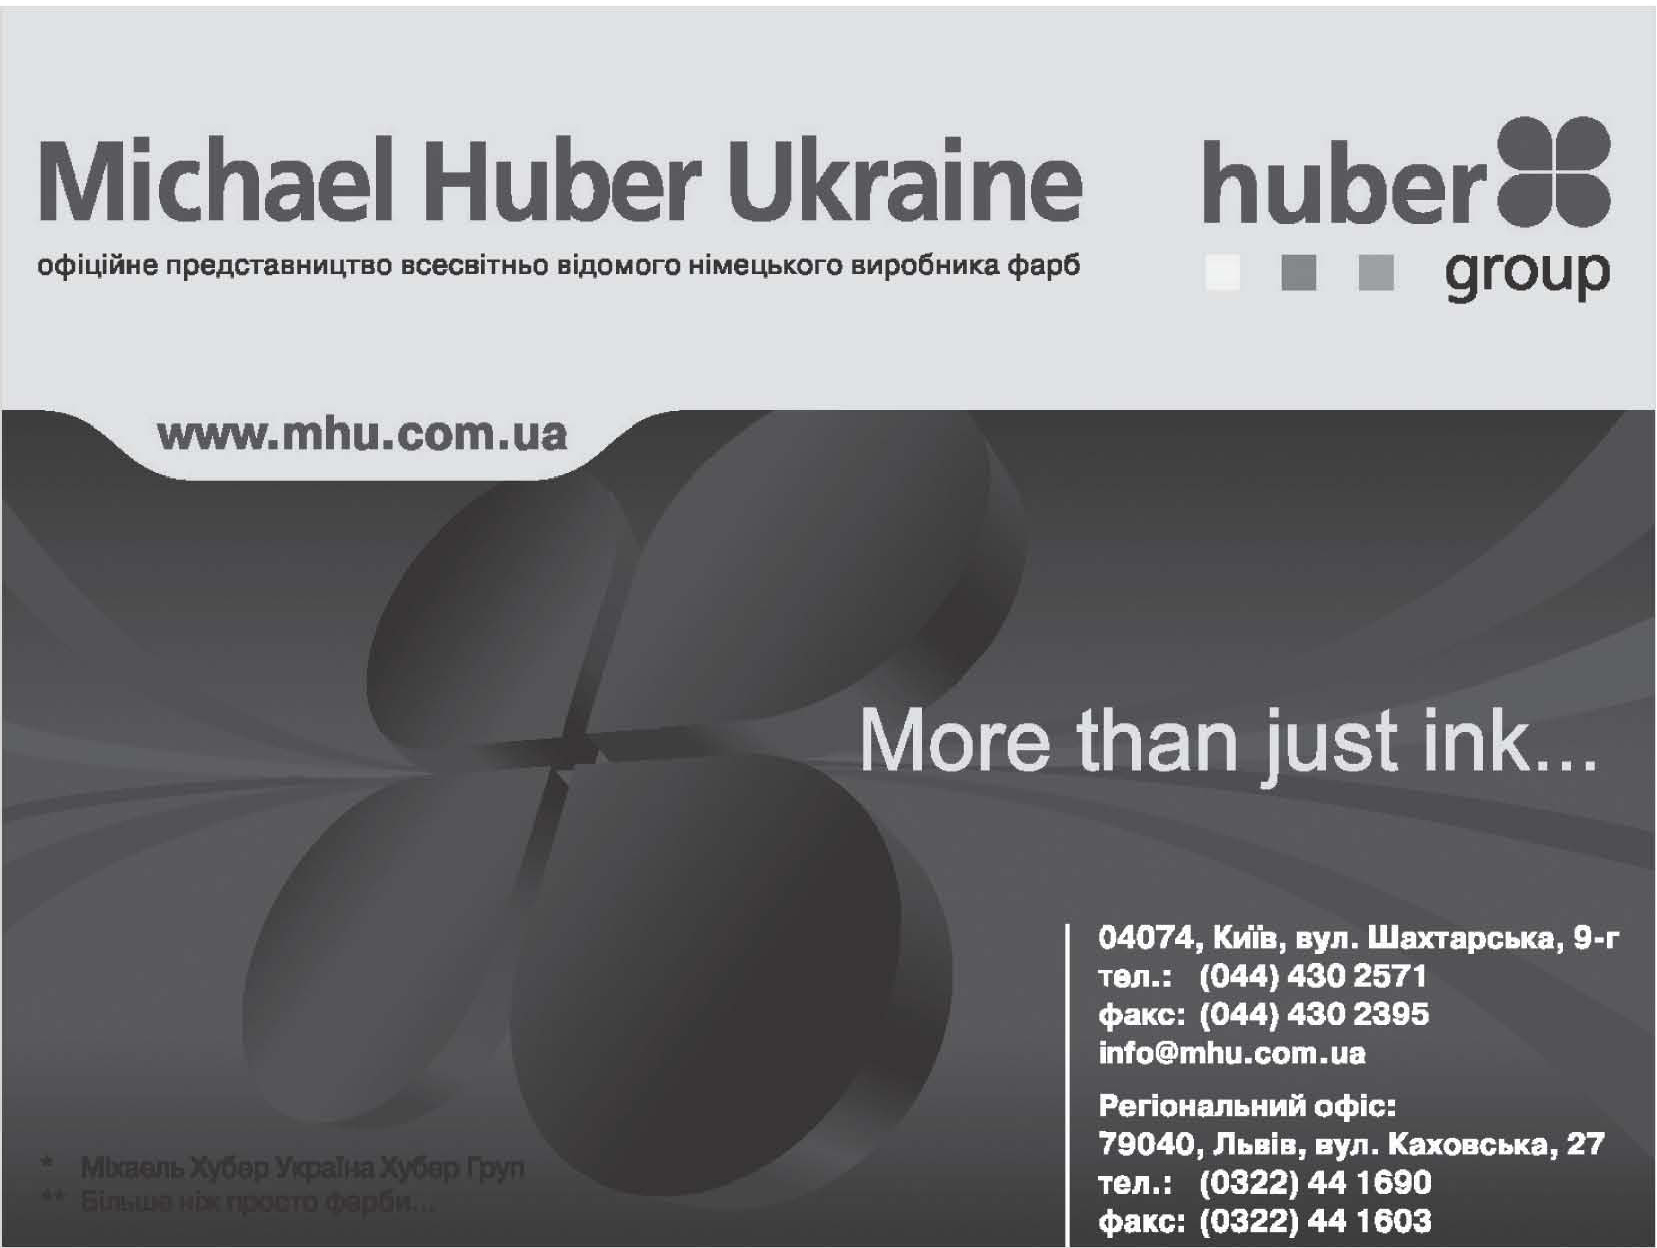 Mishael Huber Ukraine